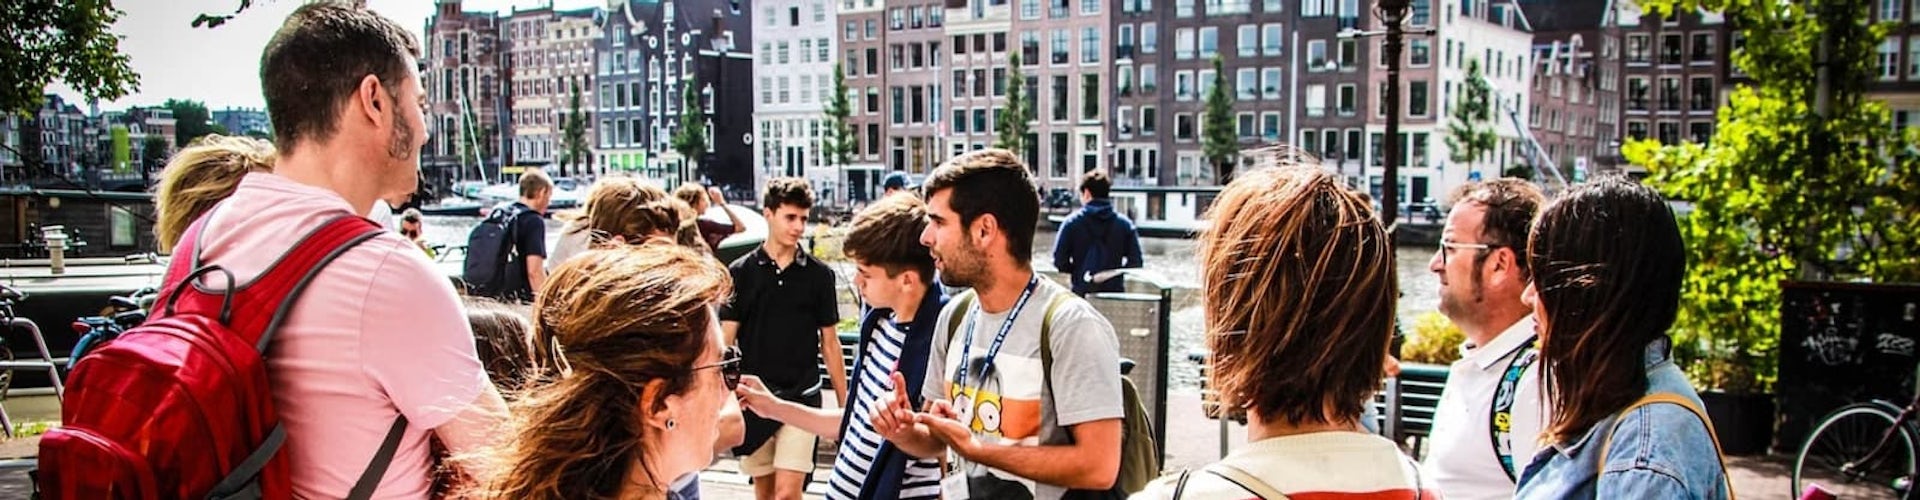 Amsterdam Walking Tour Canal Cruise